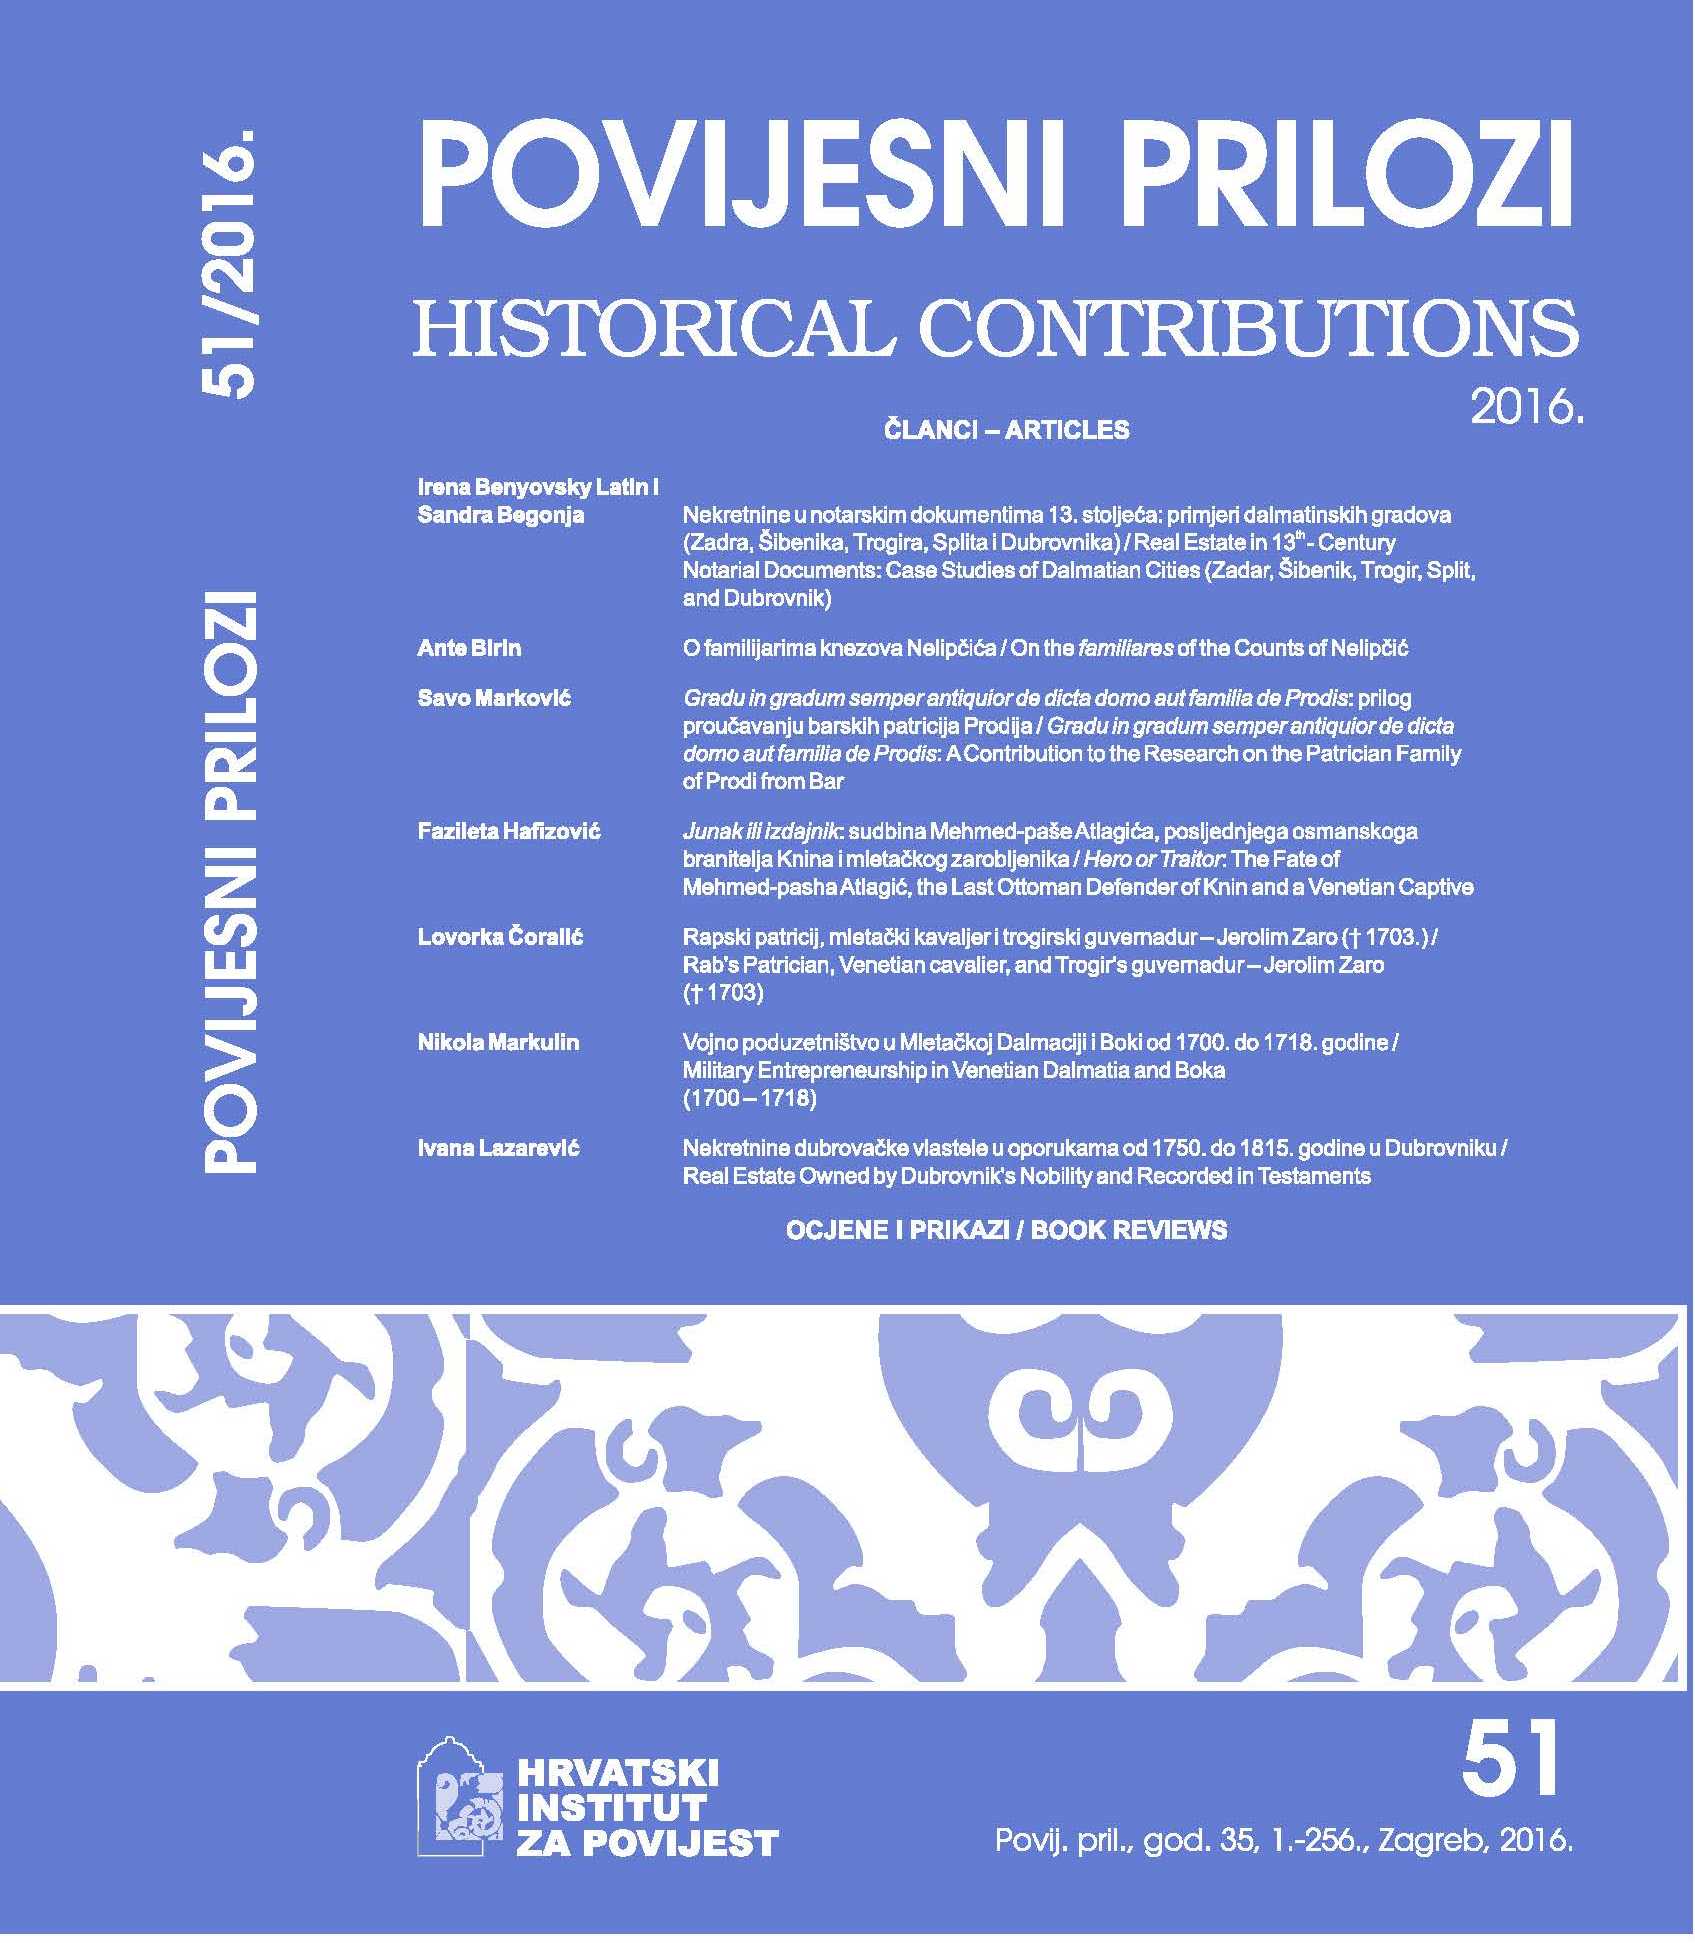 Real Estate in 13th-Century Notarial Documents: Case Studies of Dalmatian Cities (Zadar, Šibenik, Trogir, Split, and Dubrovnik) Cover Image